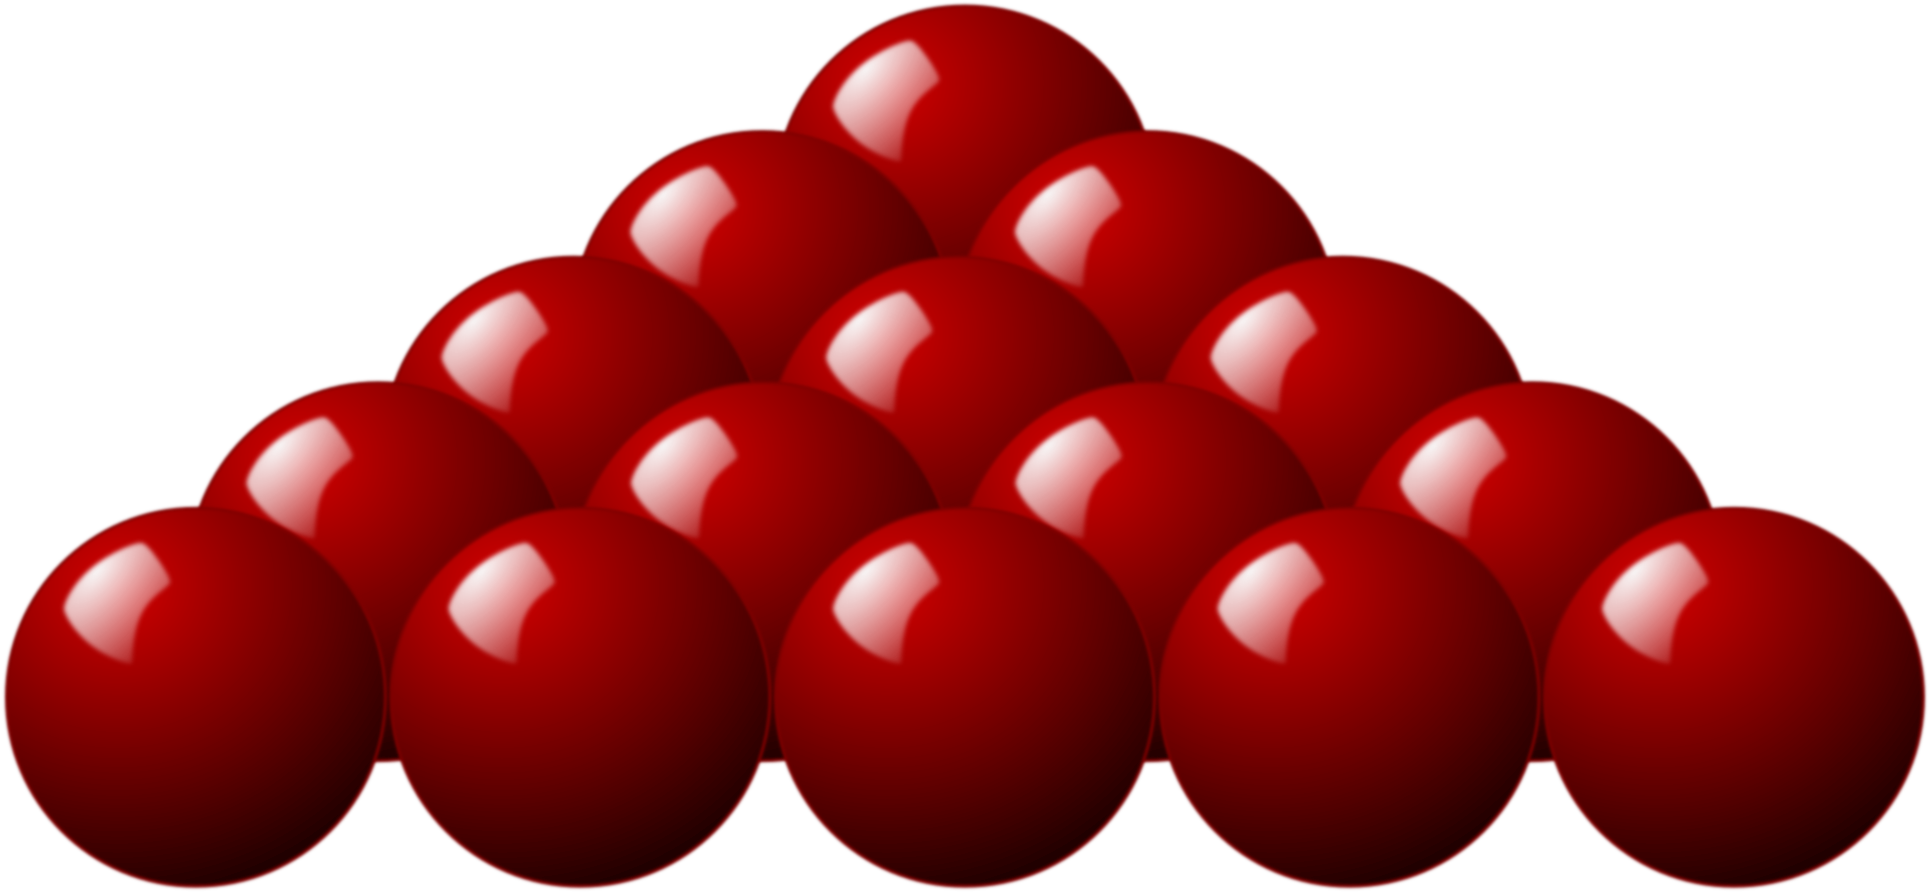 Big Image - Snooker Balls (2400x1440)